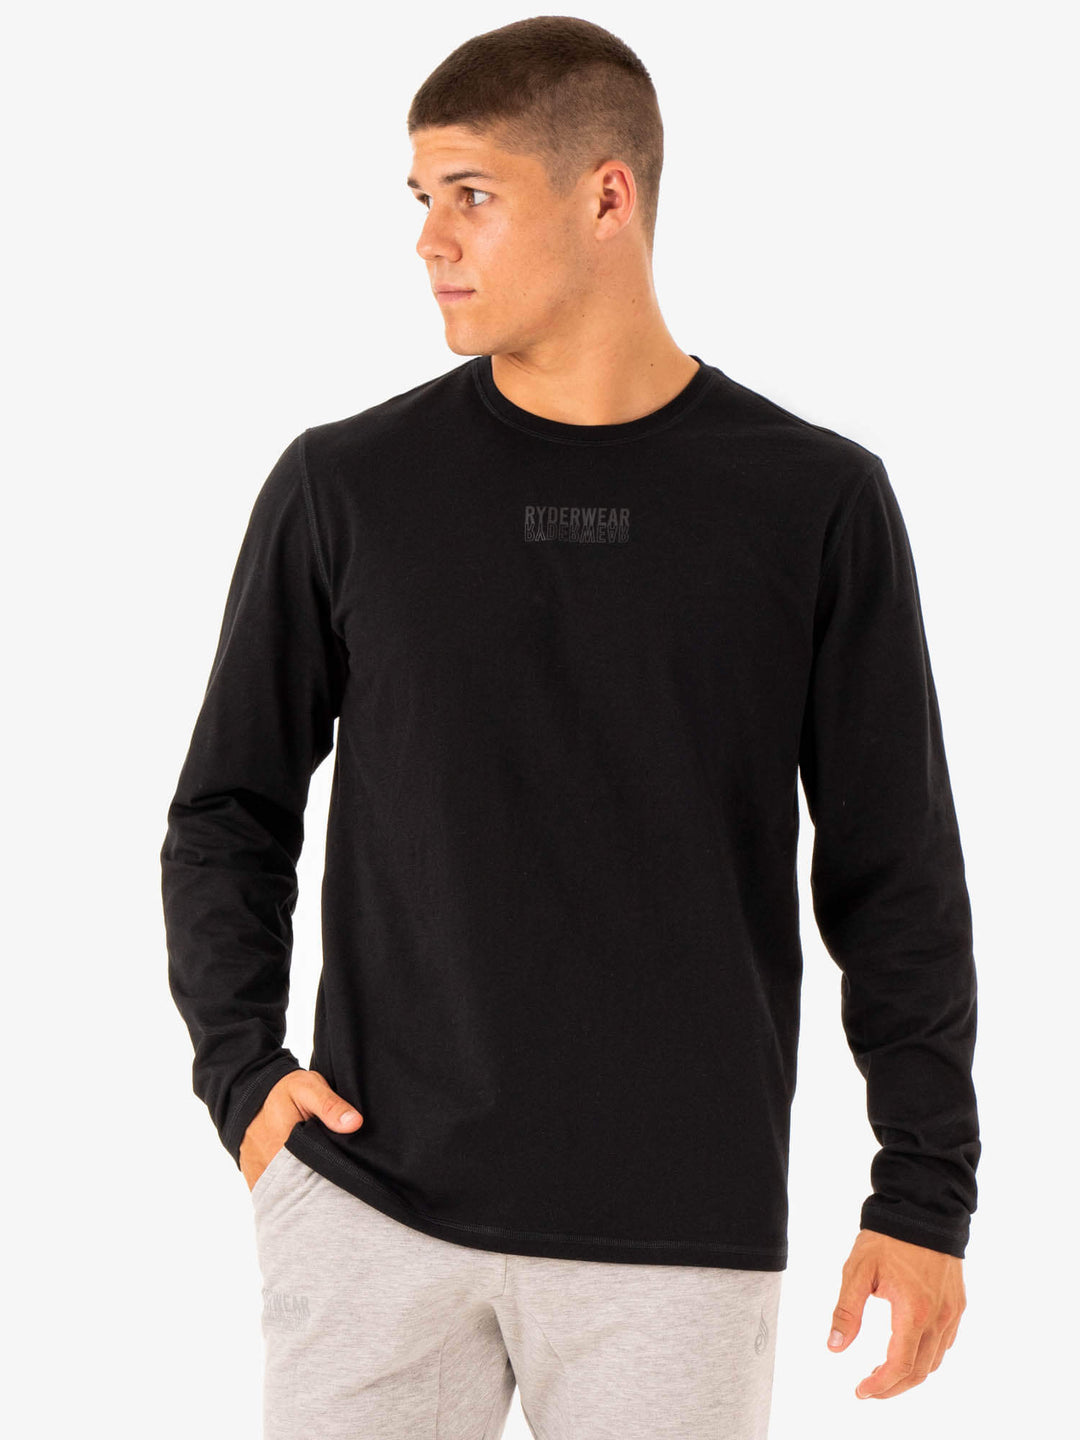 Limitless Long Sleeve T-Shirt - Black Clothing Ryderwear 